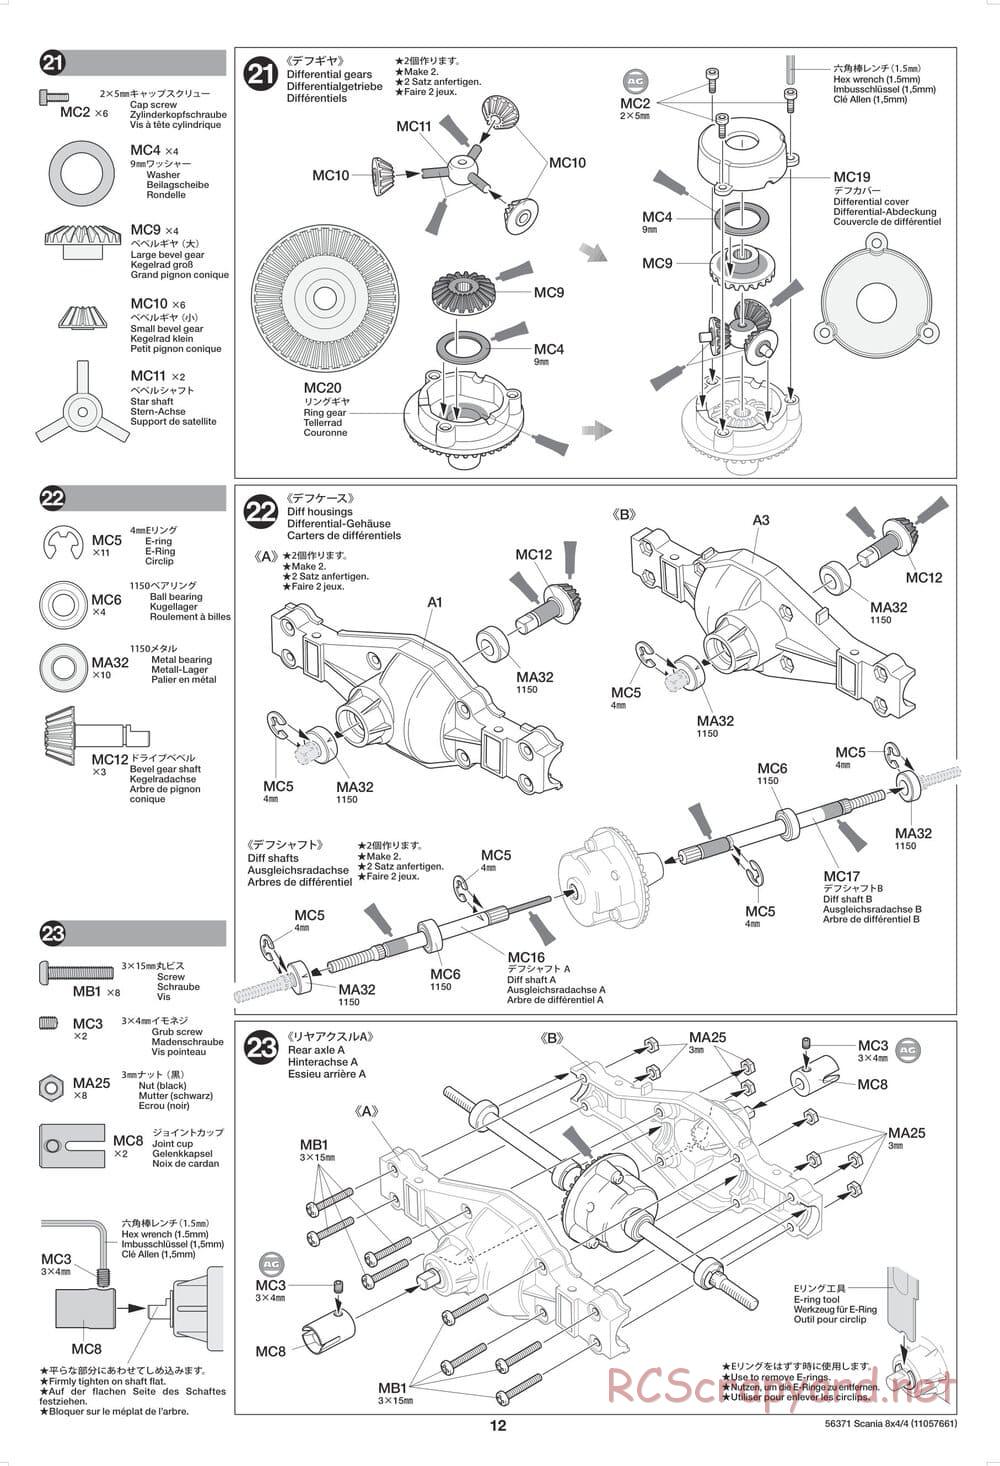 Tamiya - Scania 770 S 8x4/4 Chassis - Manual - Page 12